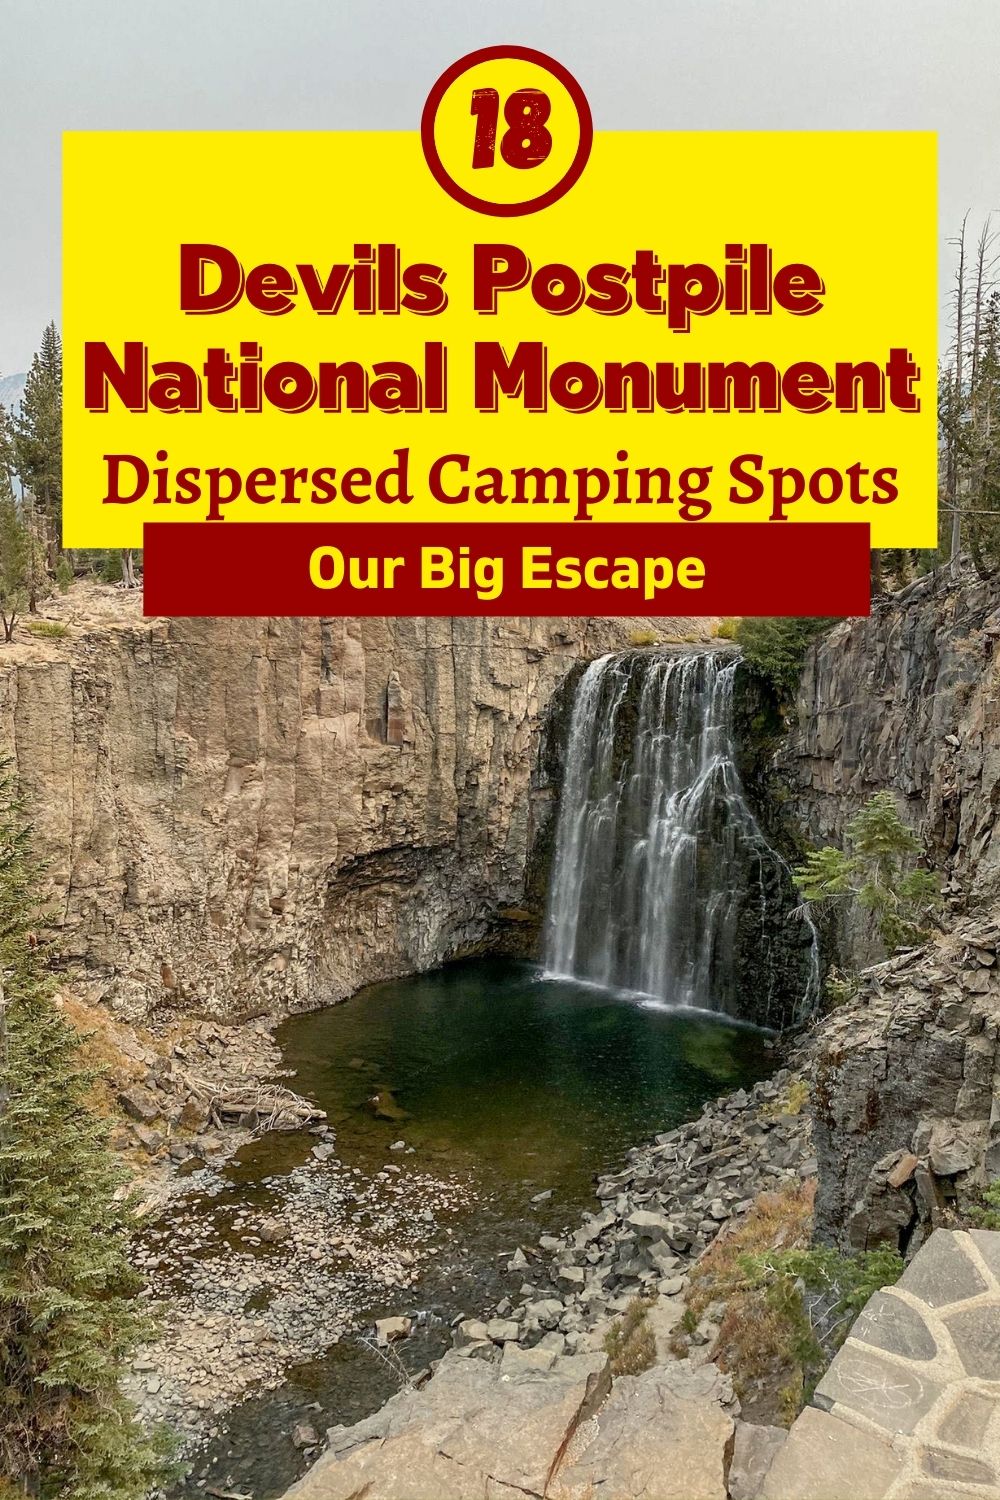 Devils Postpile National Monument